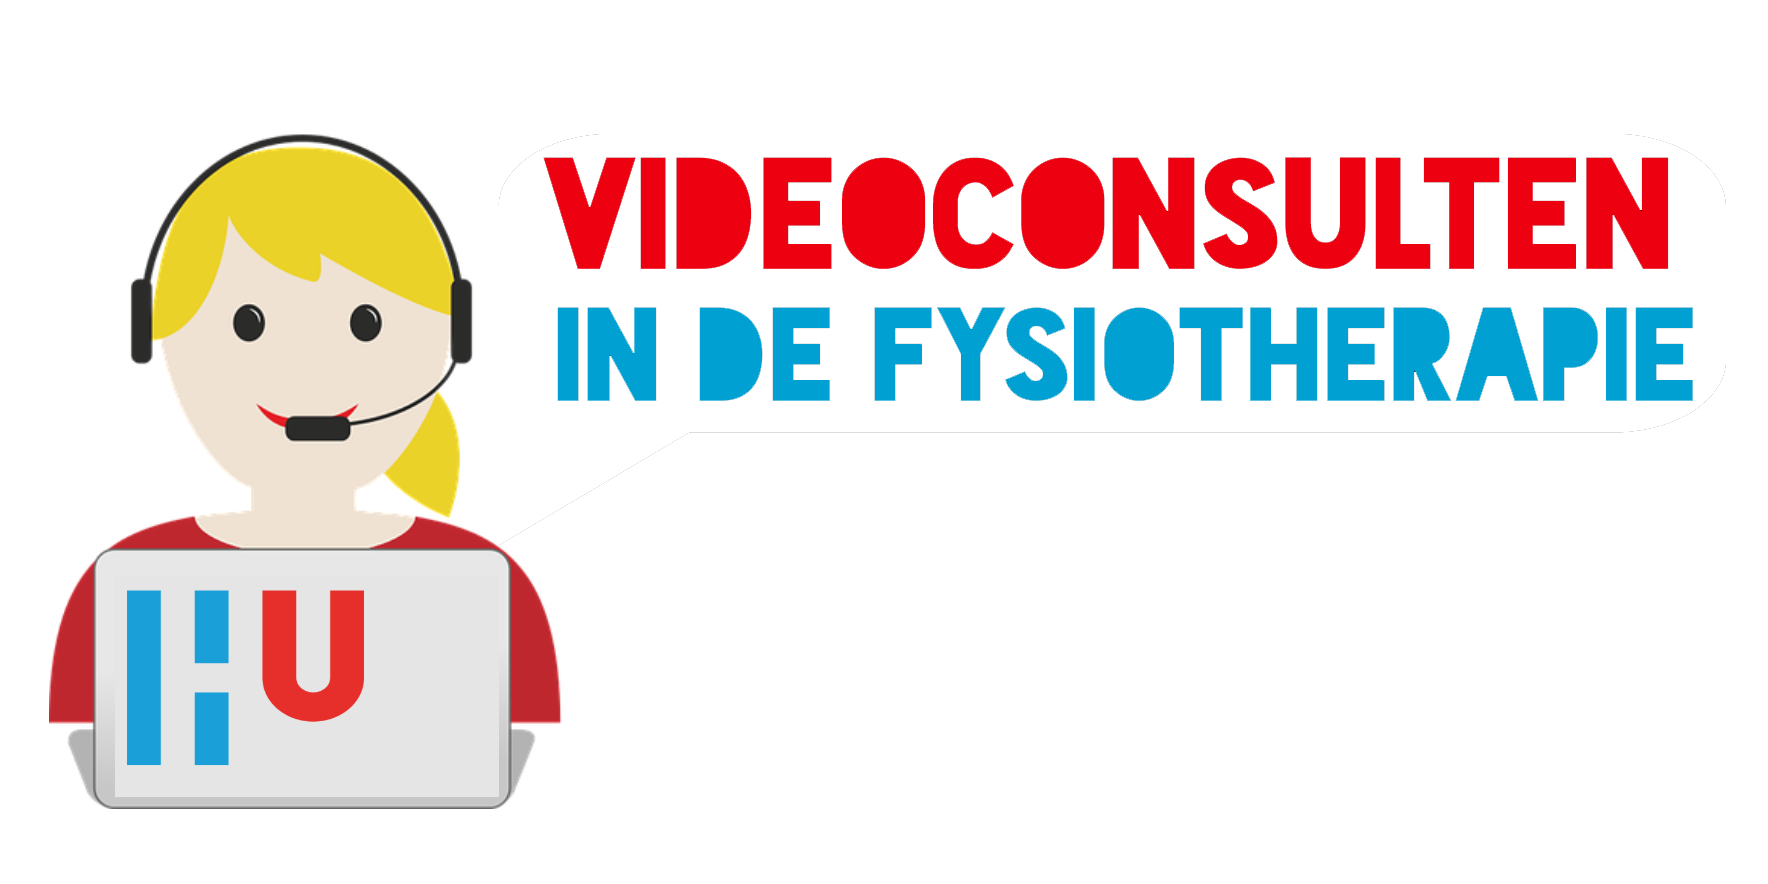 Videoconsulten fysiotherapie Hoge School Utrecht